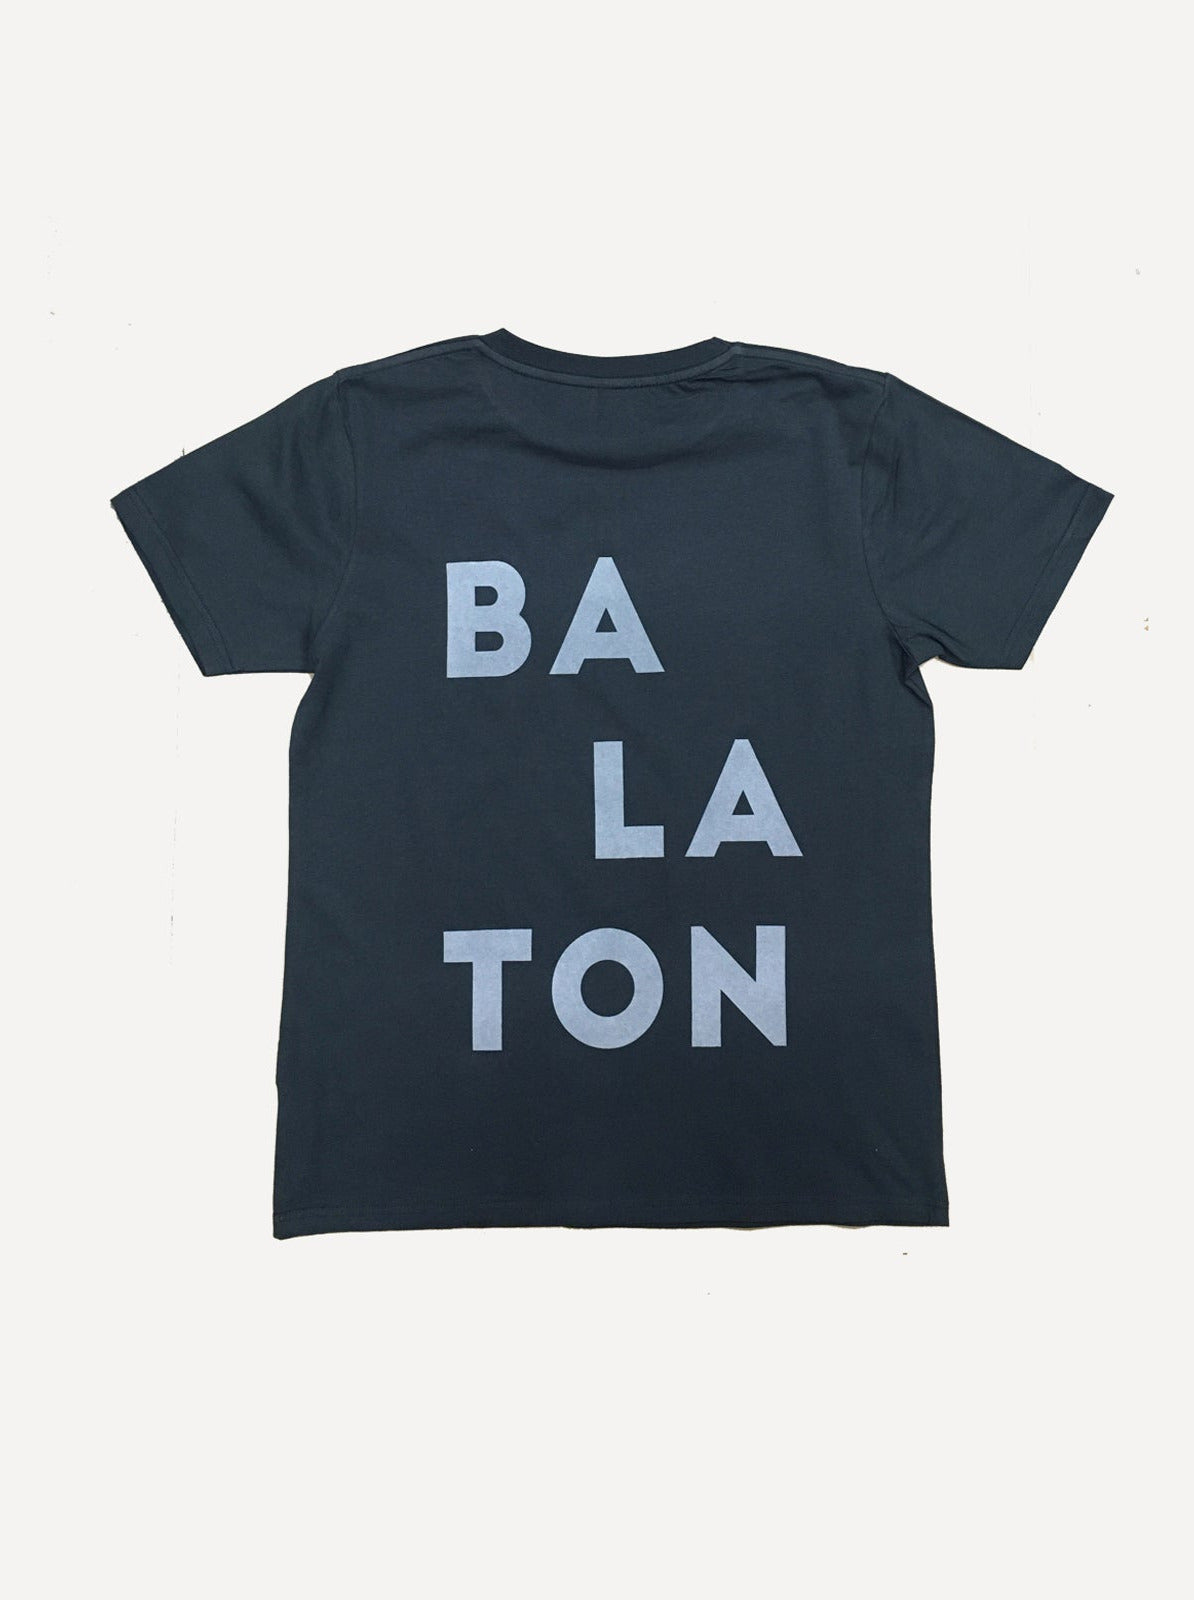 Dark blue men's t-shirt with Balaton pattern